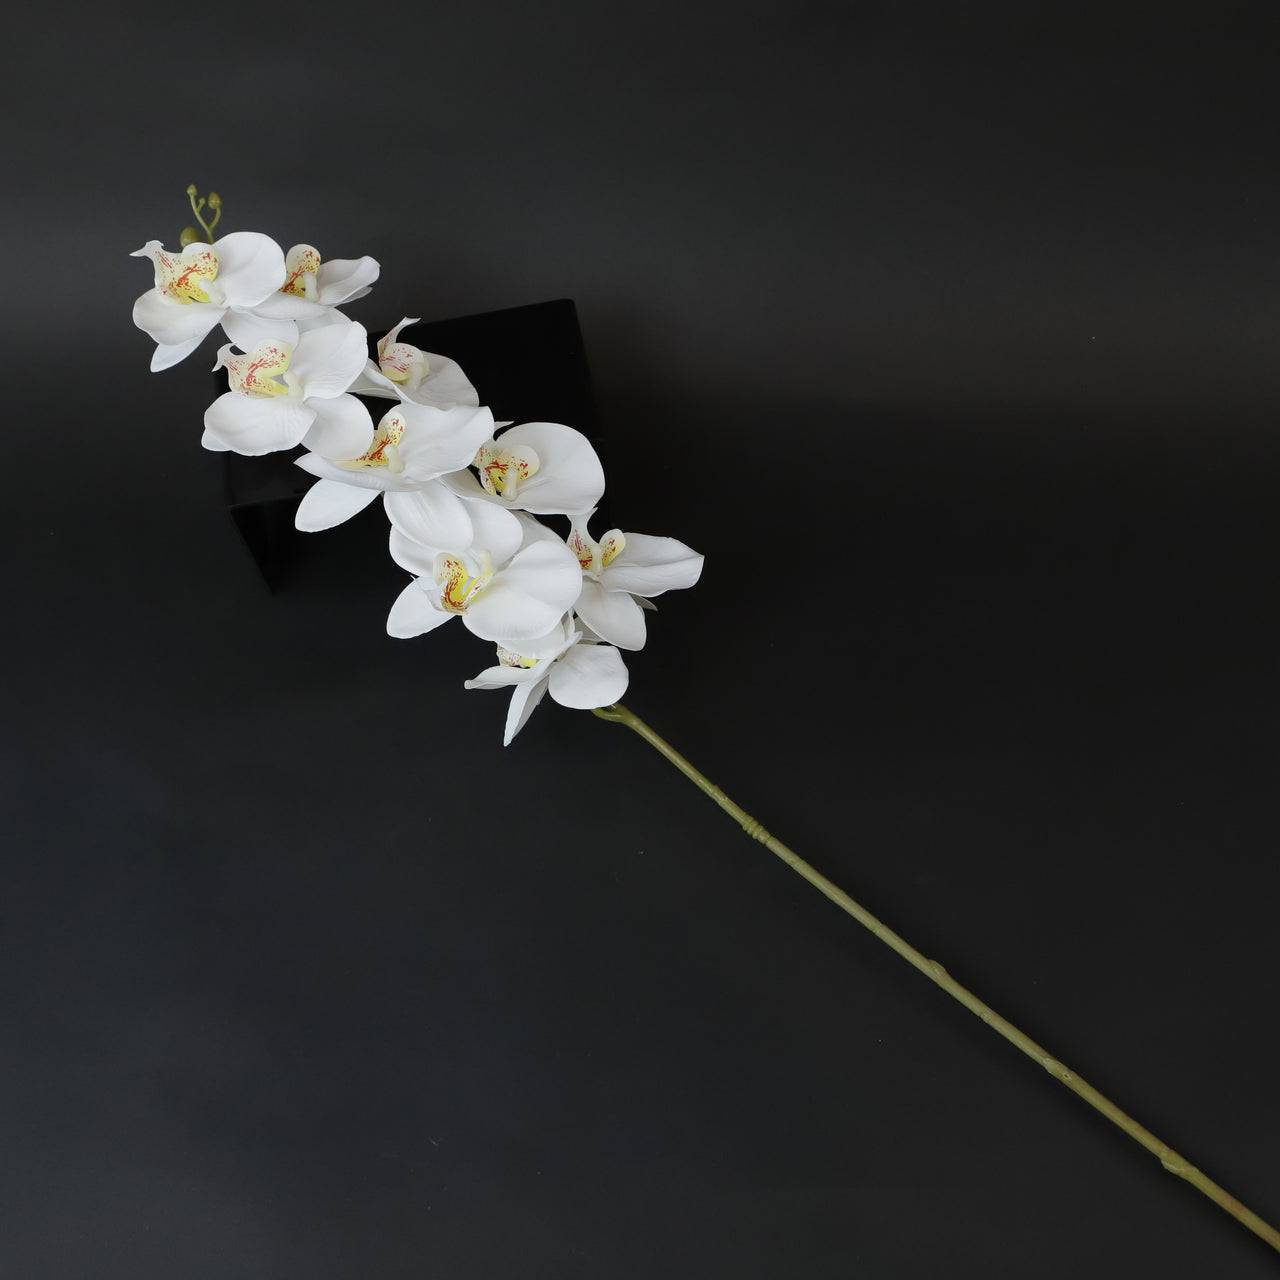 HCFL7262 - Medium White Orchid